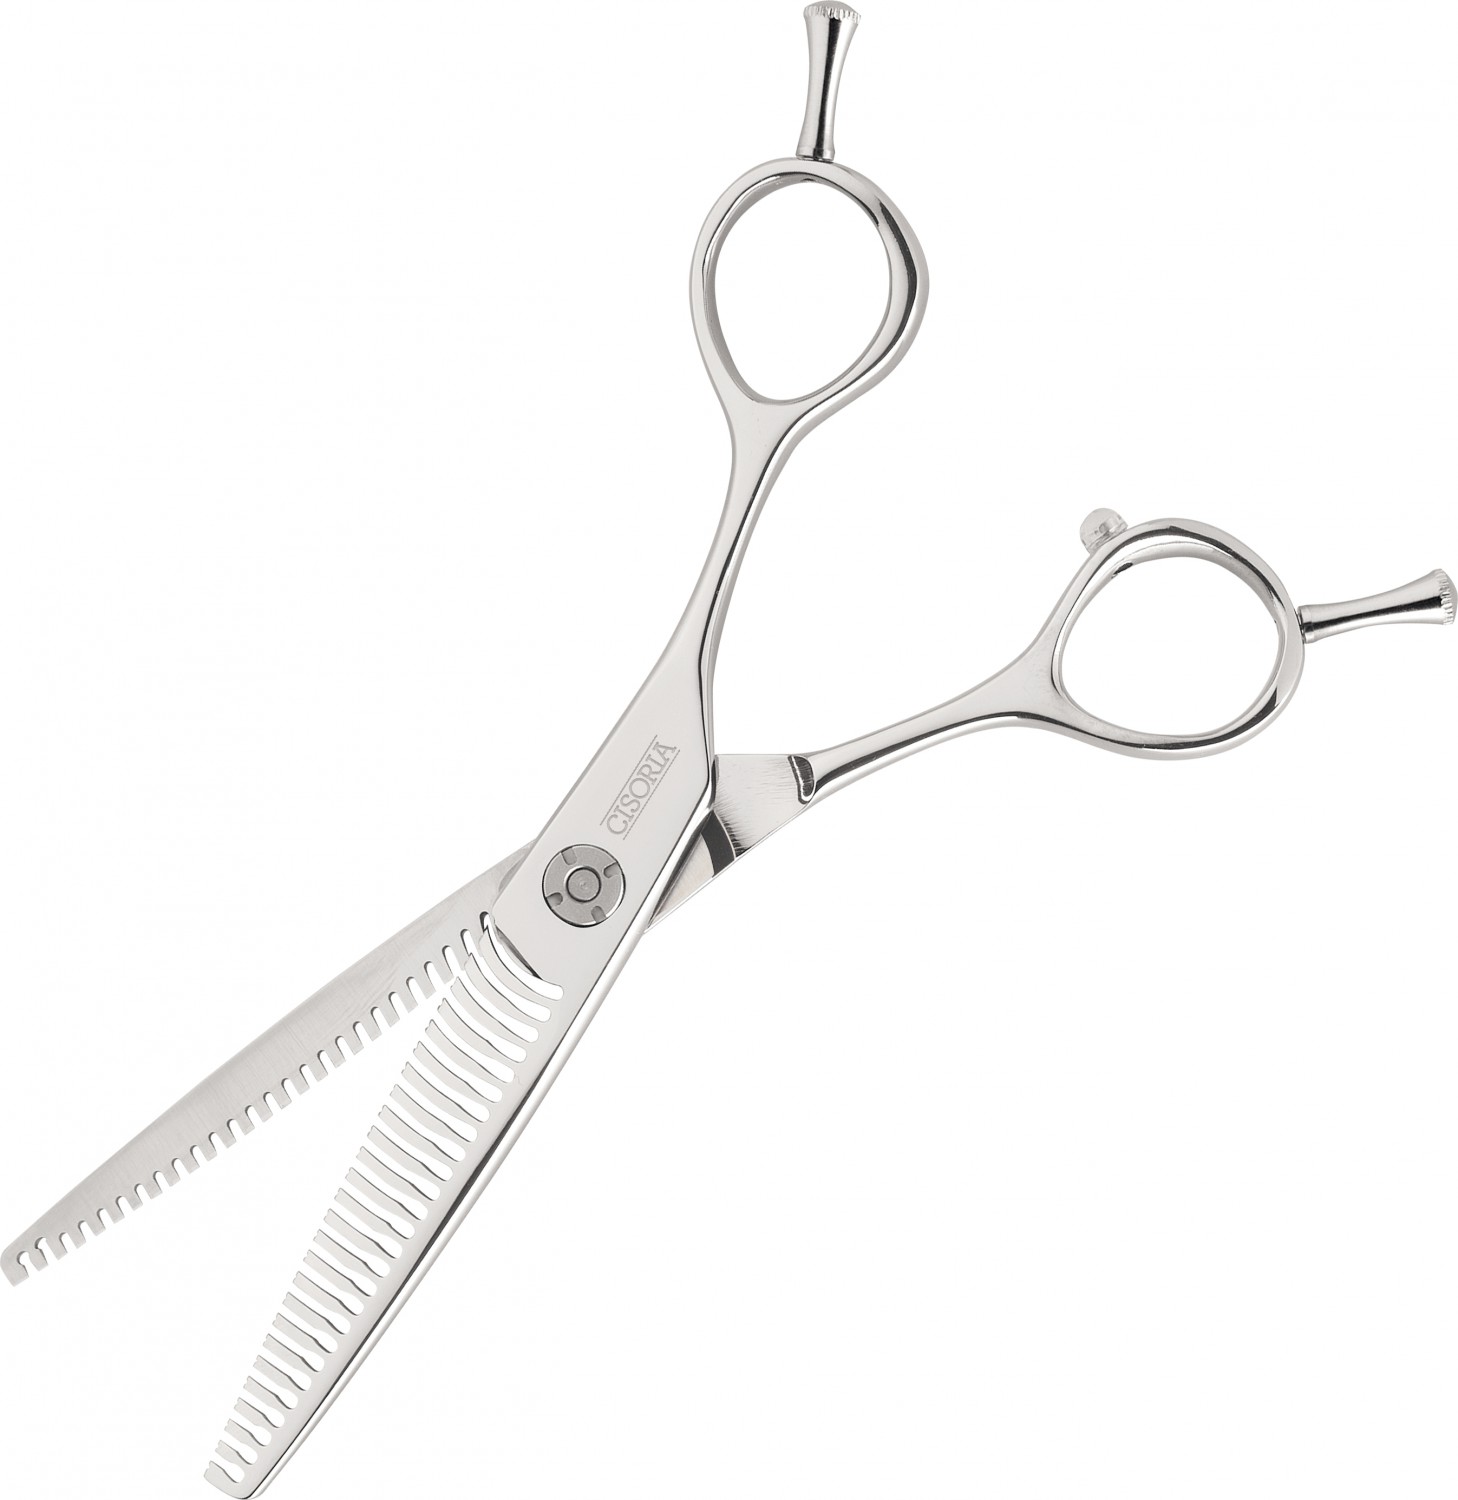  Cisoria Straight Thinning Scissors 6" SDV26 by Sibel 